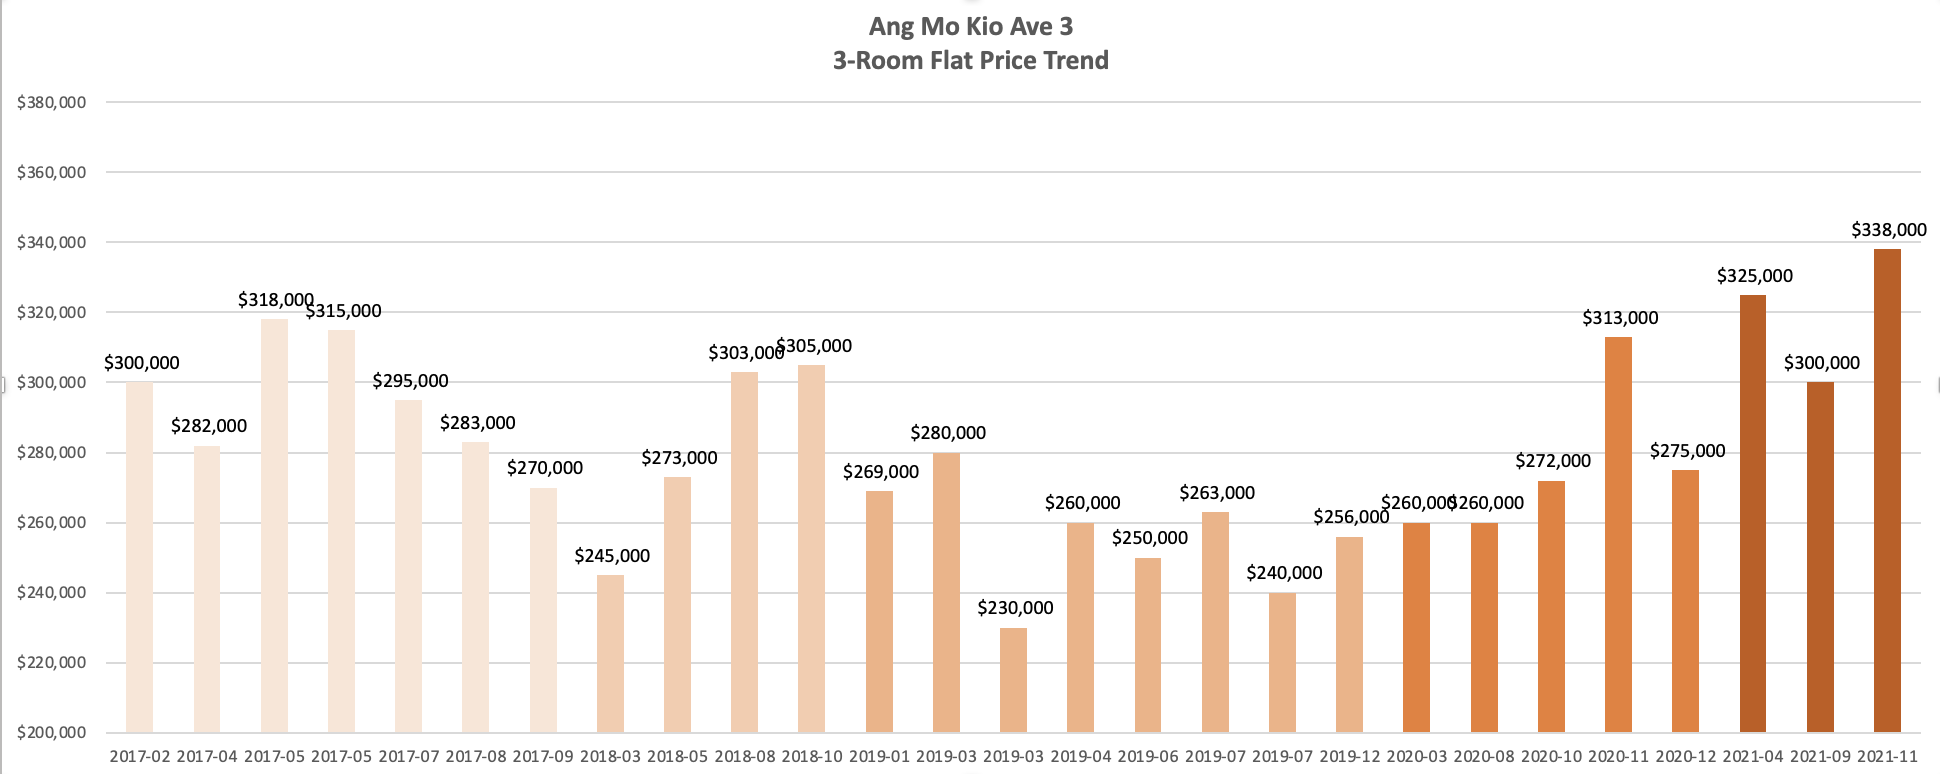 Ang Mo Kio Ave 3 3-Room Flat Price Trend